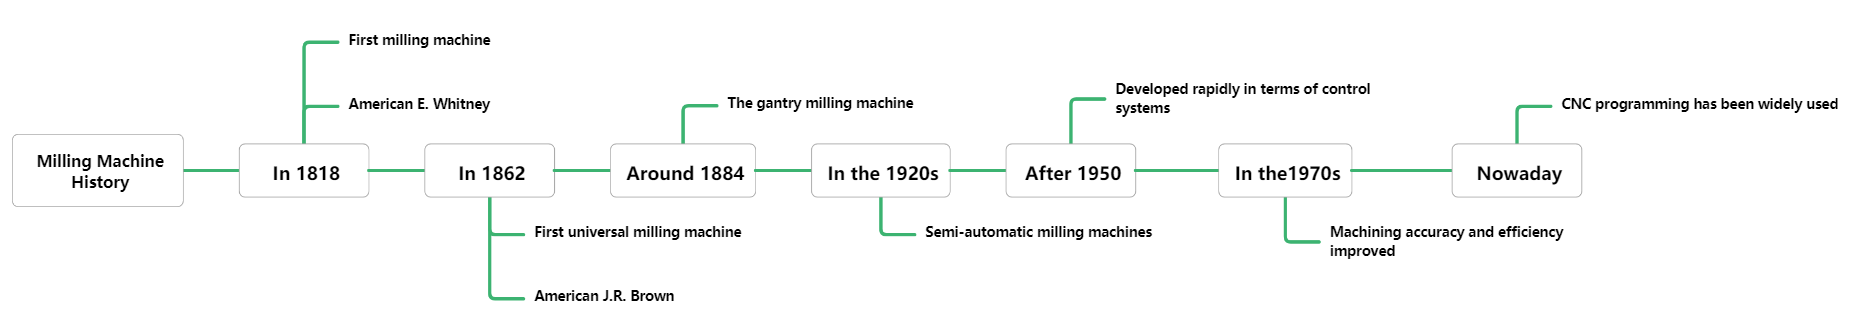 Milling Machine History